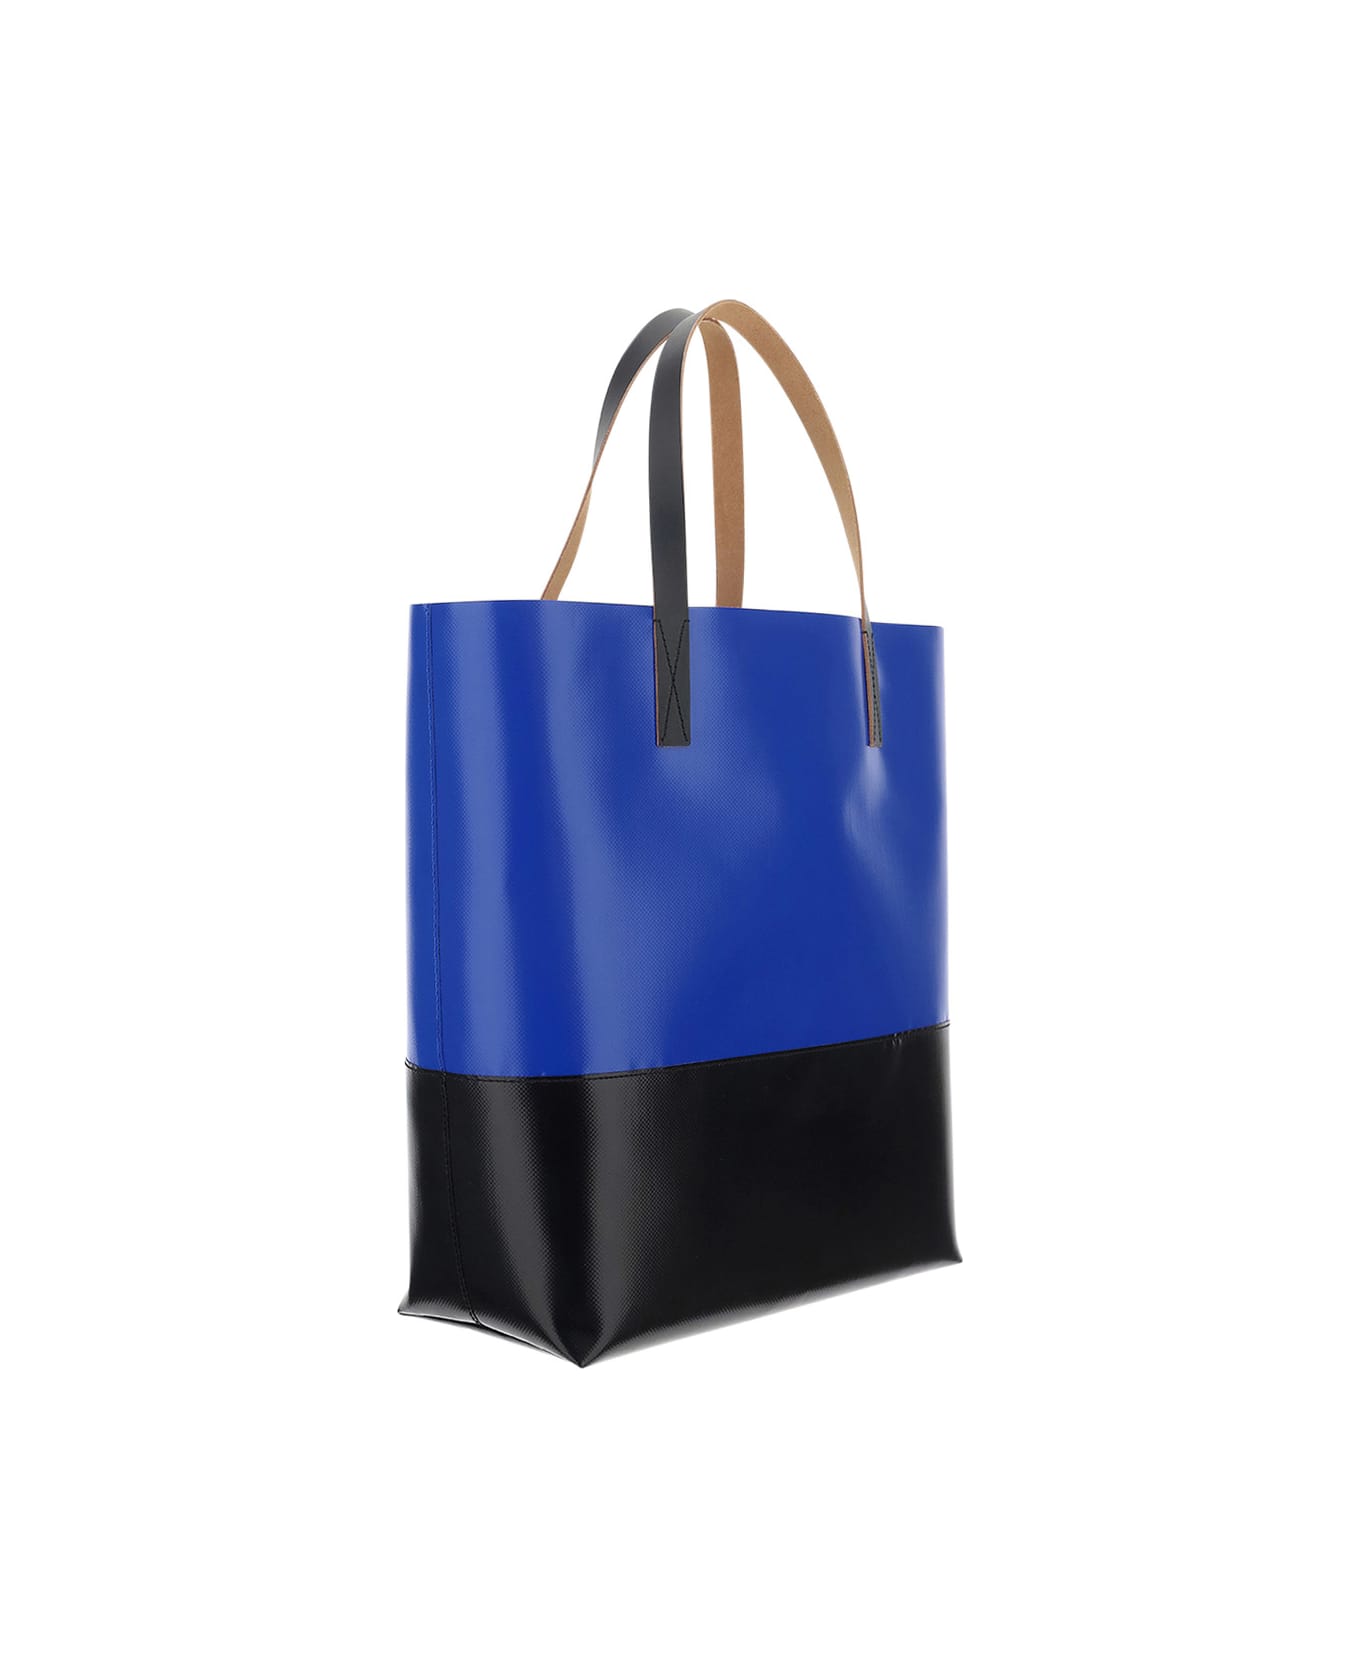 Marni Shopping Bag - Blu/nero トートバッグ